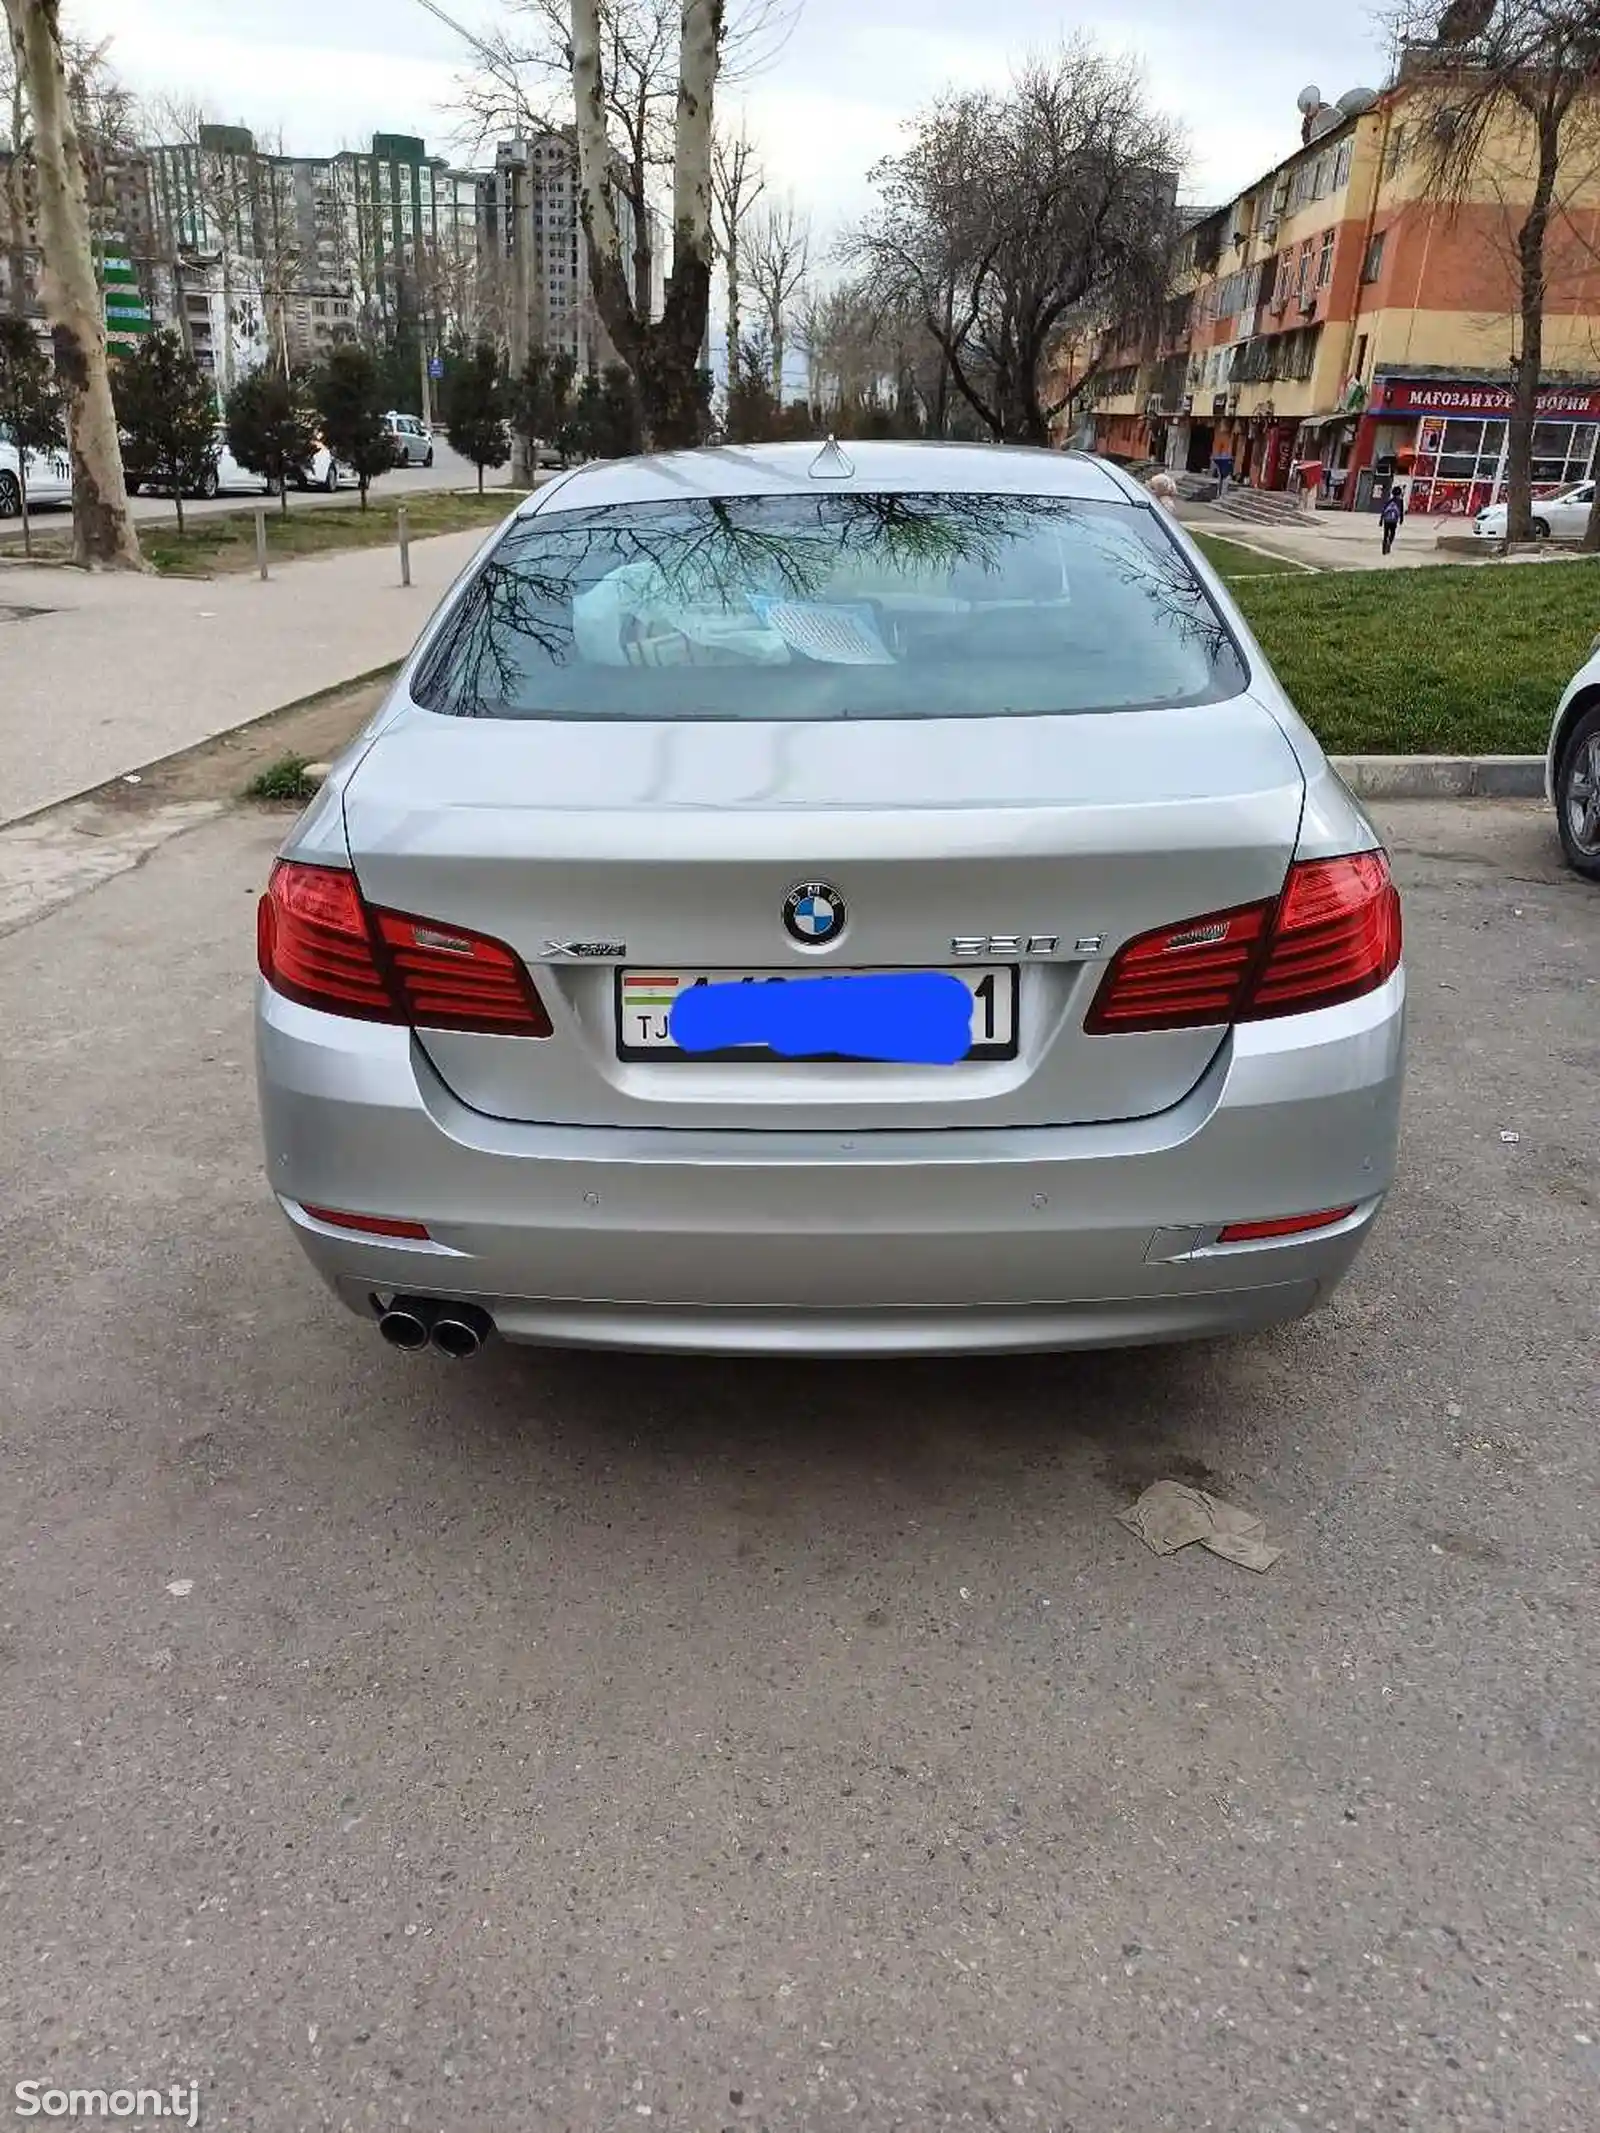 BMW 5 series, 2014-2